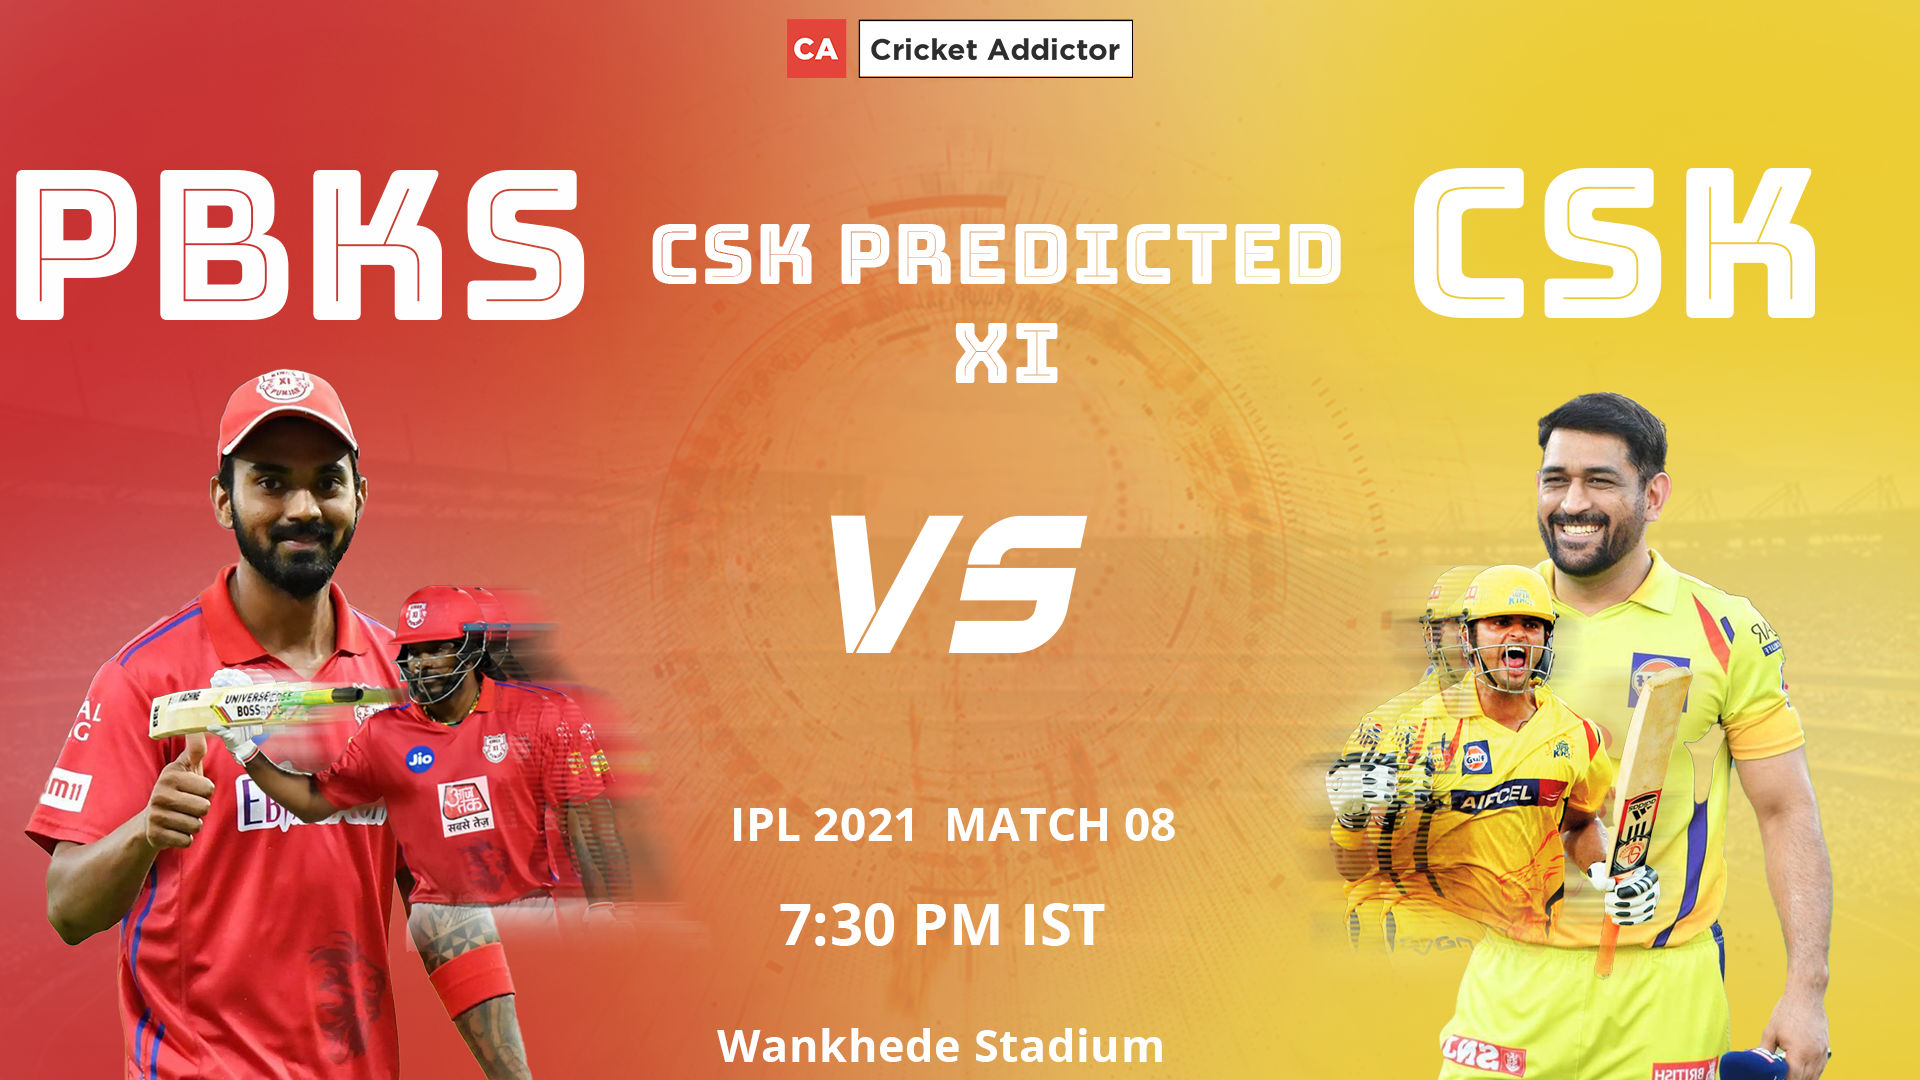 IPL 2021, Chennai Super Kings, CSK, predicted playing XI, playing XI, PBKS vs CSK